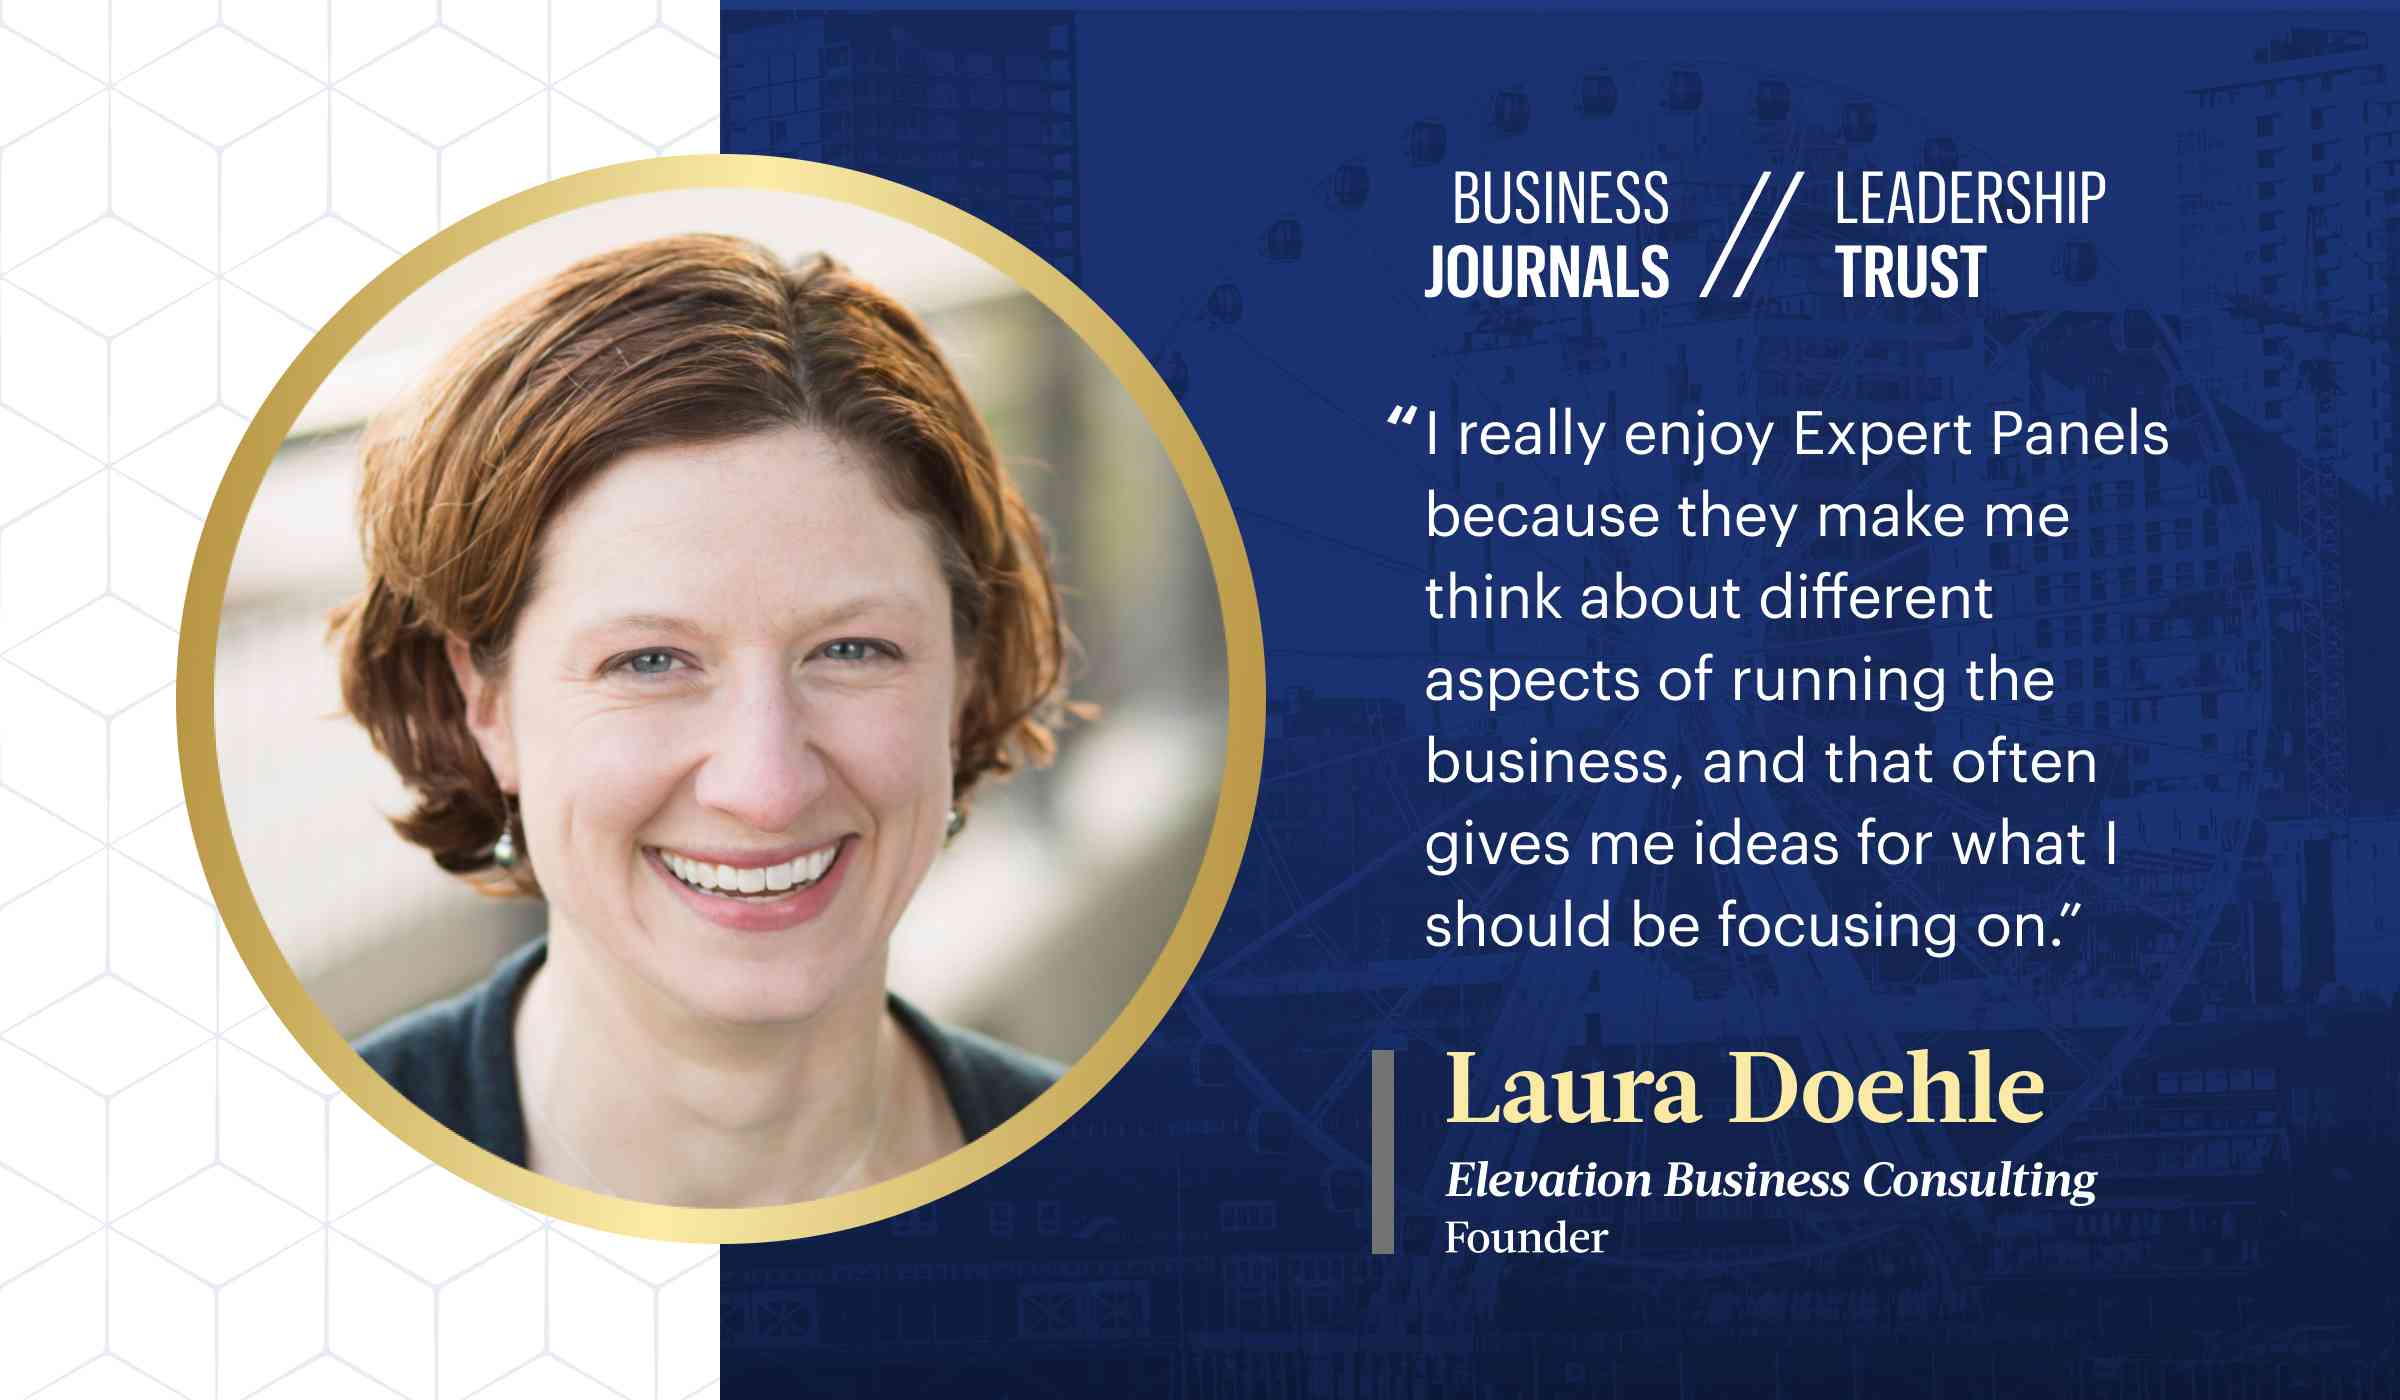 Business Journals Leadership Trust member Laura Doehle